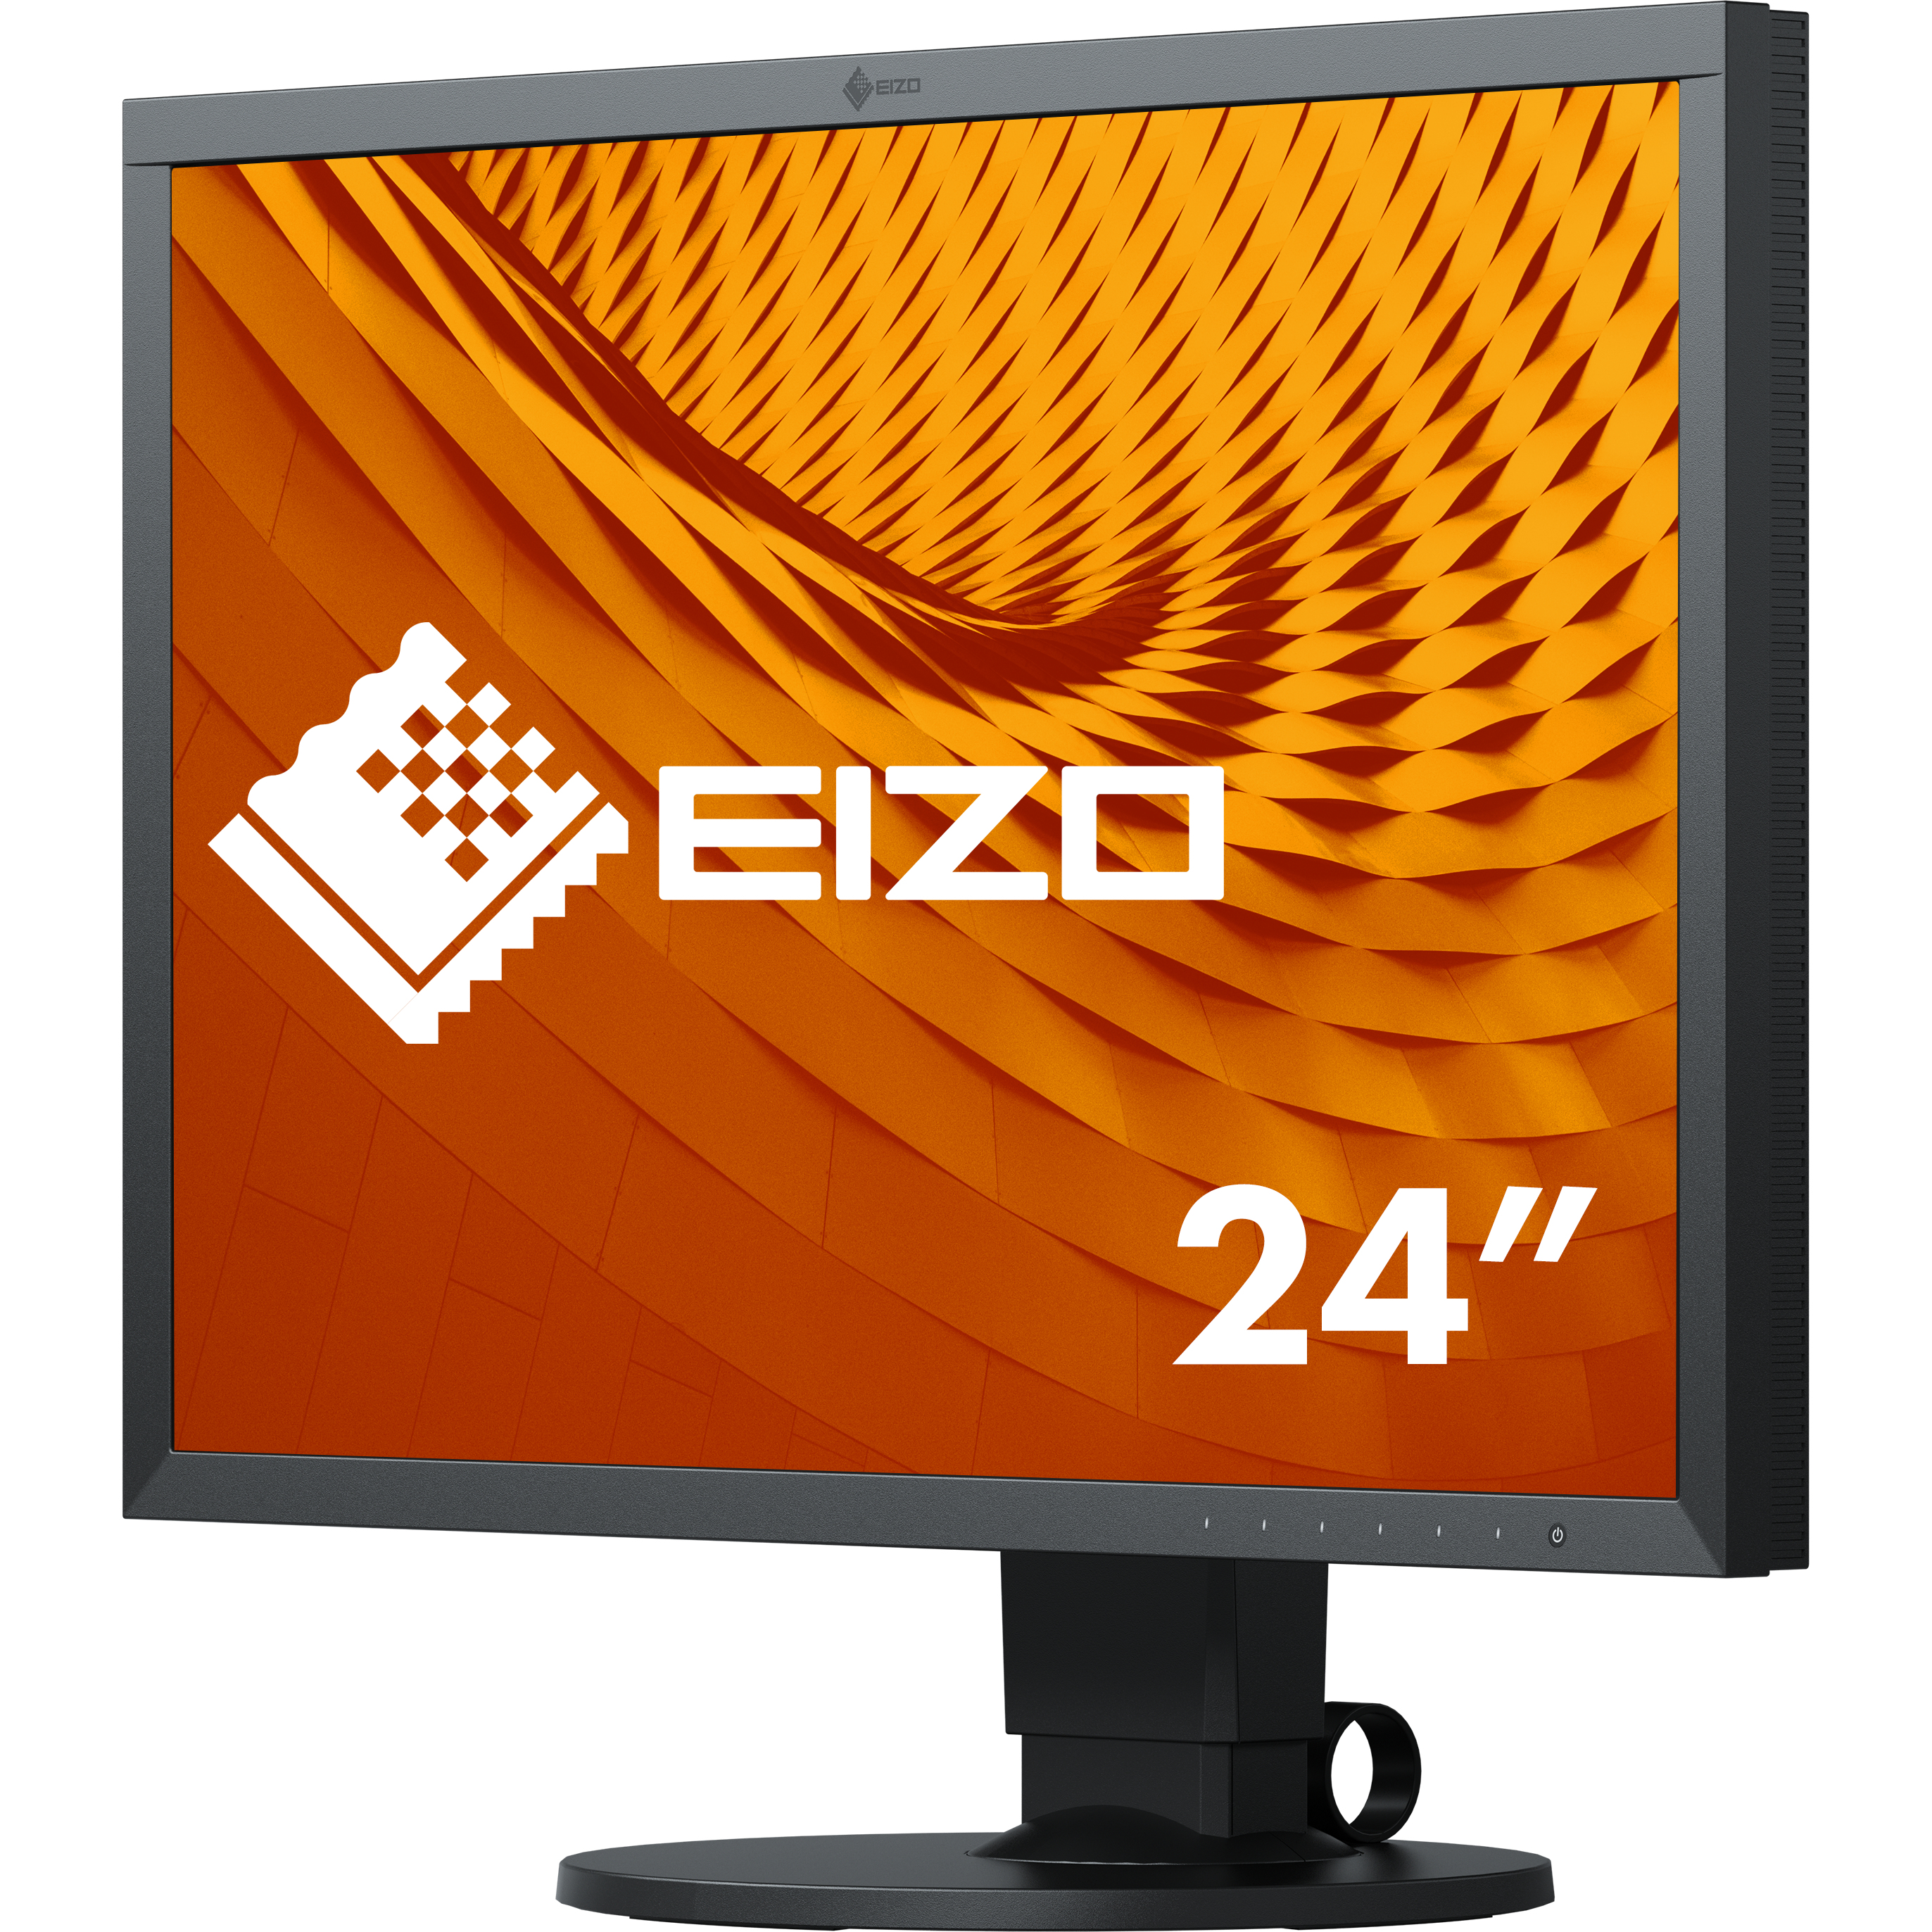 EIZO ColorEdge CS2410 LED display